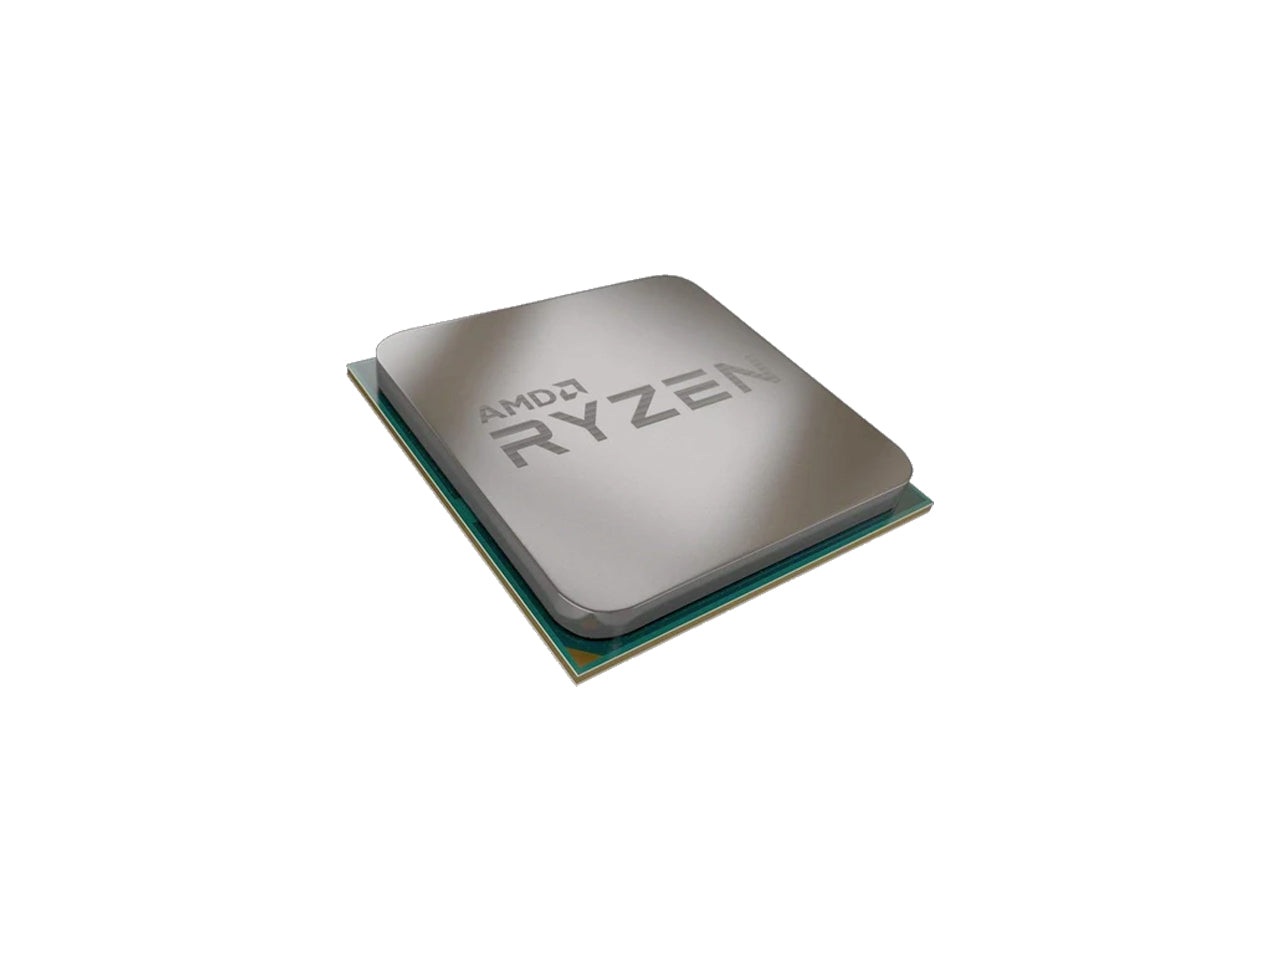 AMD CORES 6 THREADS 12 PROCESSOR RYZEN-5-1600 CPU